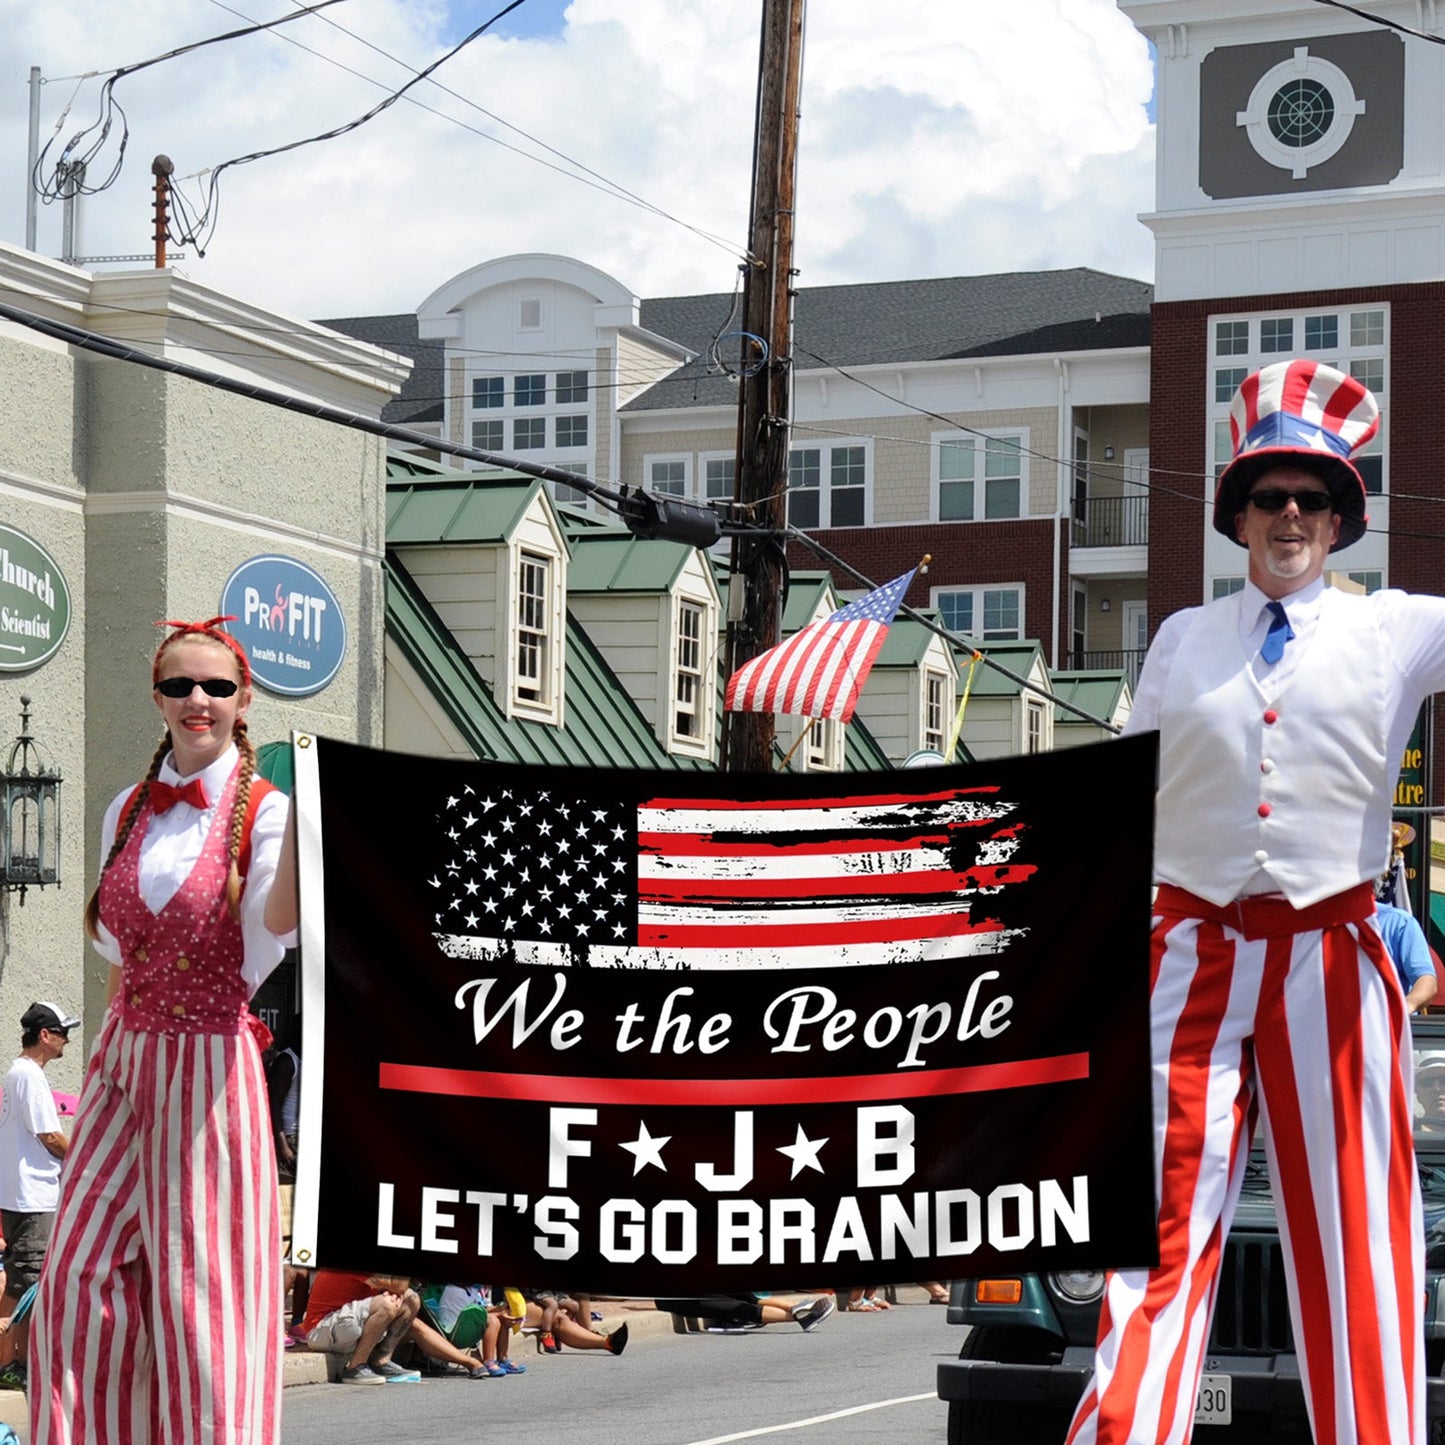 Let's Go Brandon Flag 3x5Ft Funny FJB Anti Joe Biden 2021 Garden House Yard Flag